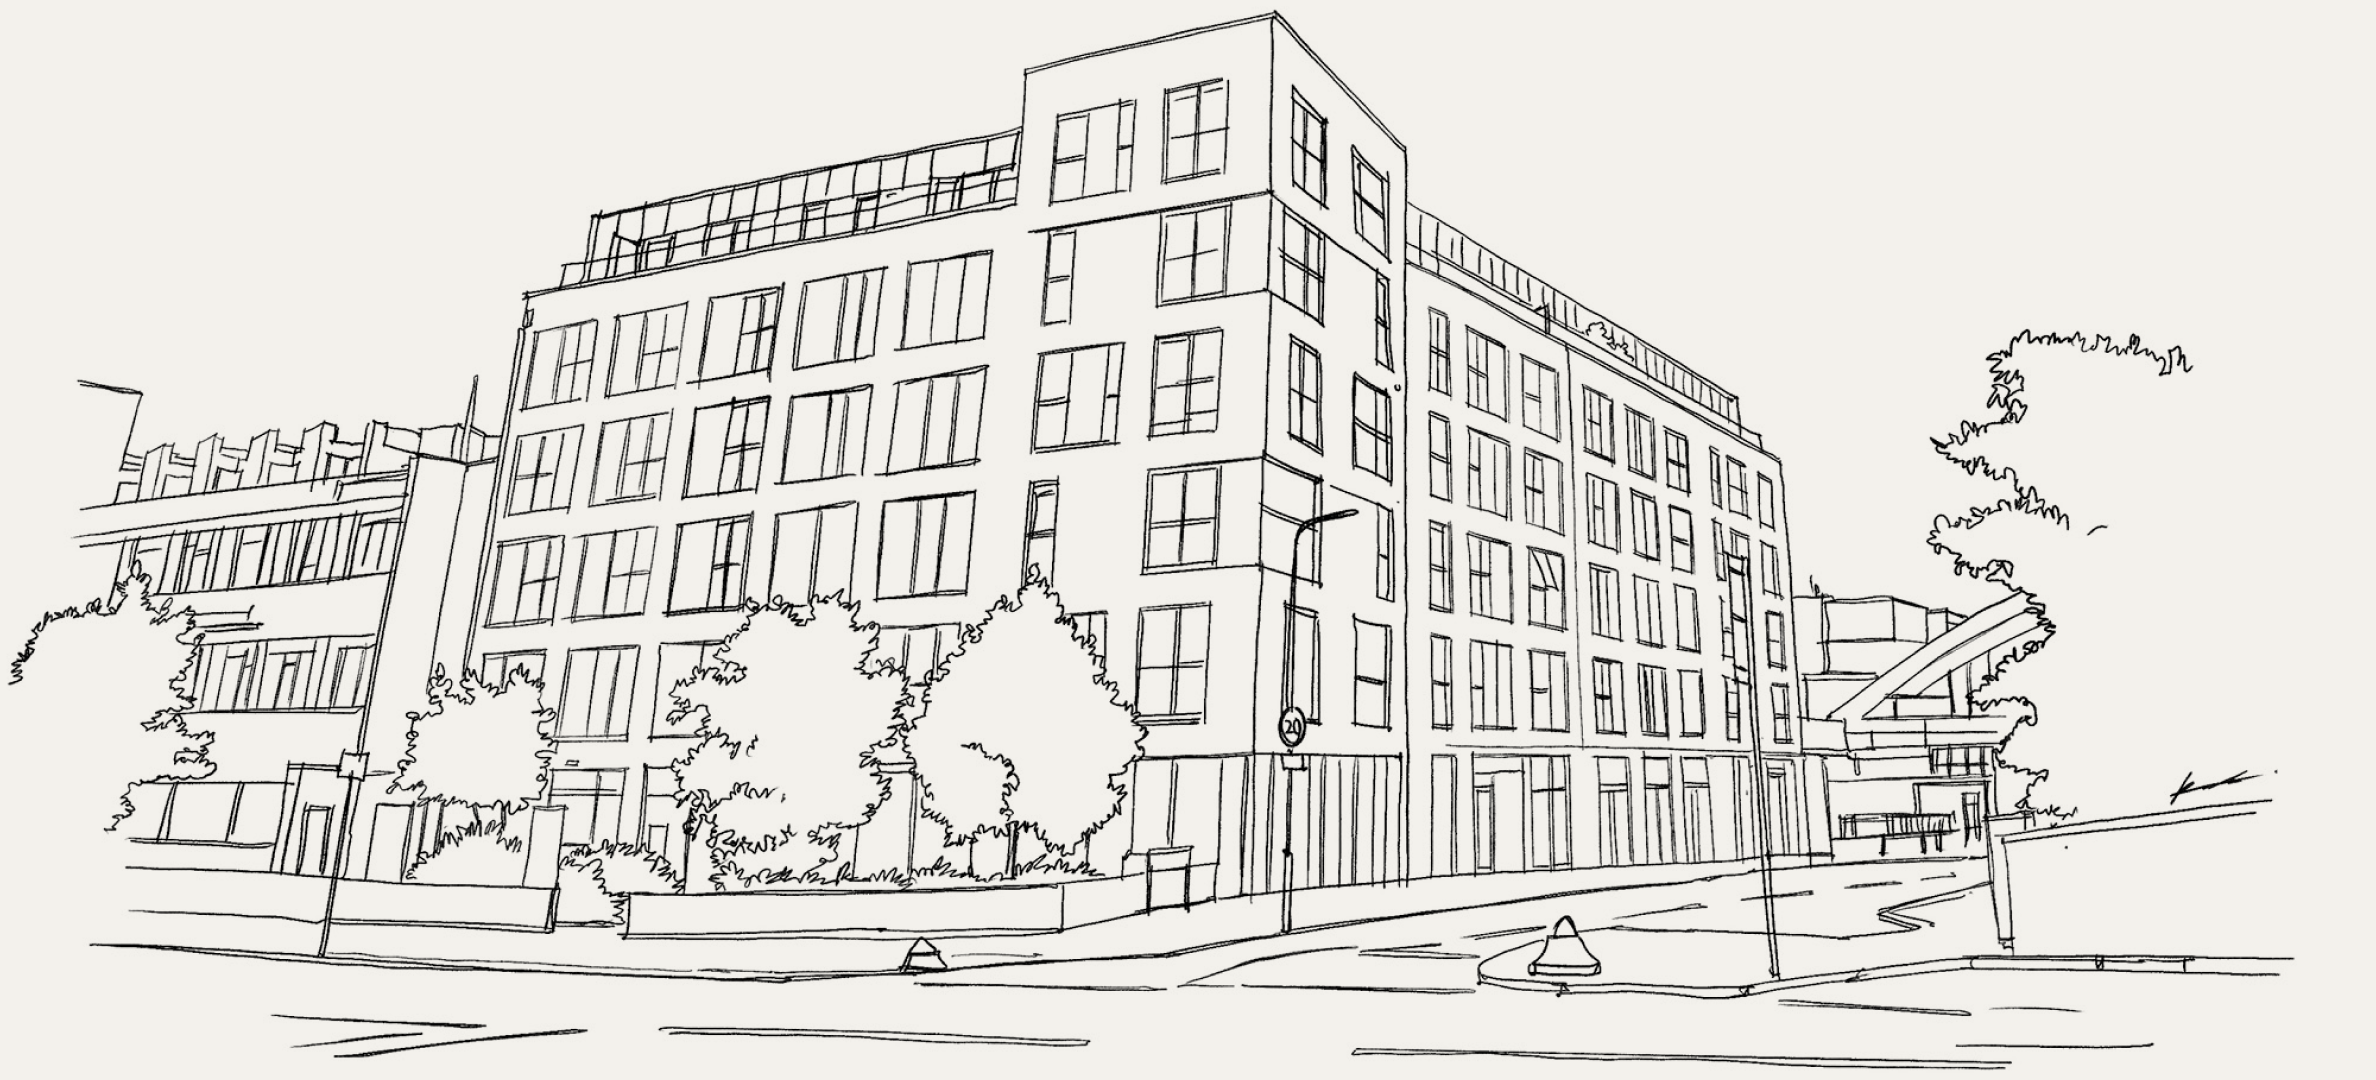 One Dunston Road building illustration